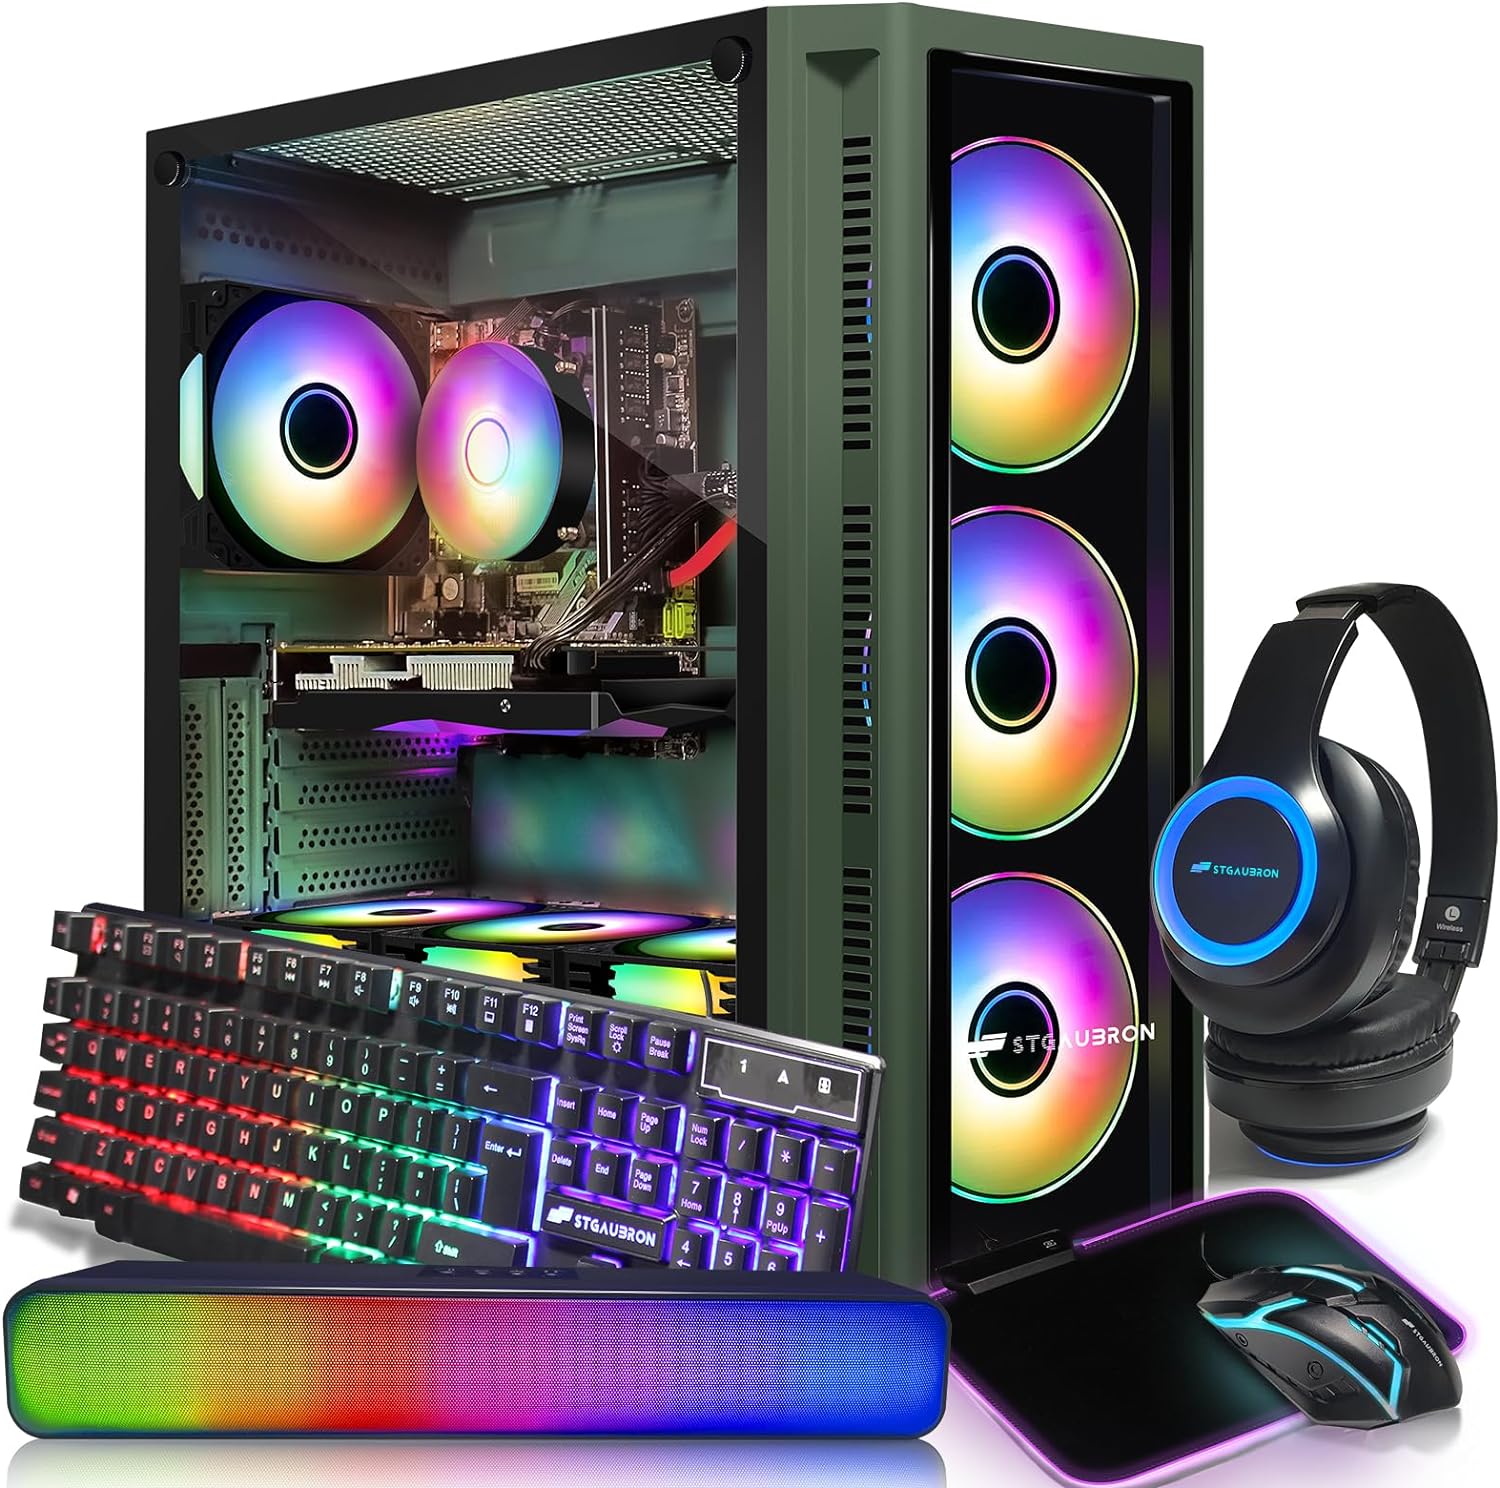 STGAubron Gaming Desktop PC Computer,Intel Core I7 3.4 GHz up to 3.9 GHz,Radeon RX 580 8G GDDR5,16G RAM,512G SSD,WiFi,Bluetooth 5.0,RGB Fanx6,RGB Keyboard&Mouse&Mouse Pad,RGB BT Sound Bar,W10H64